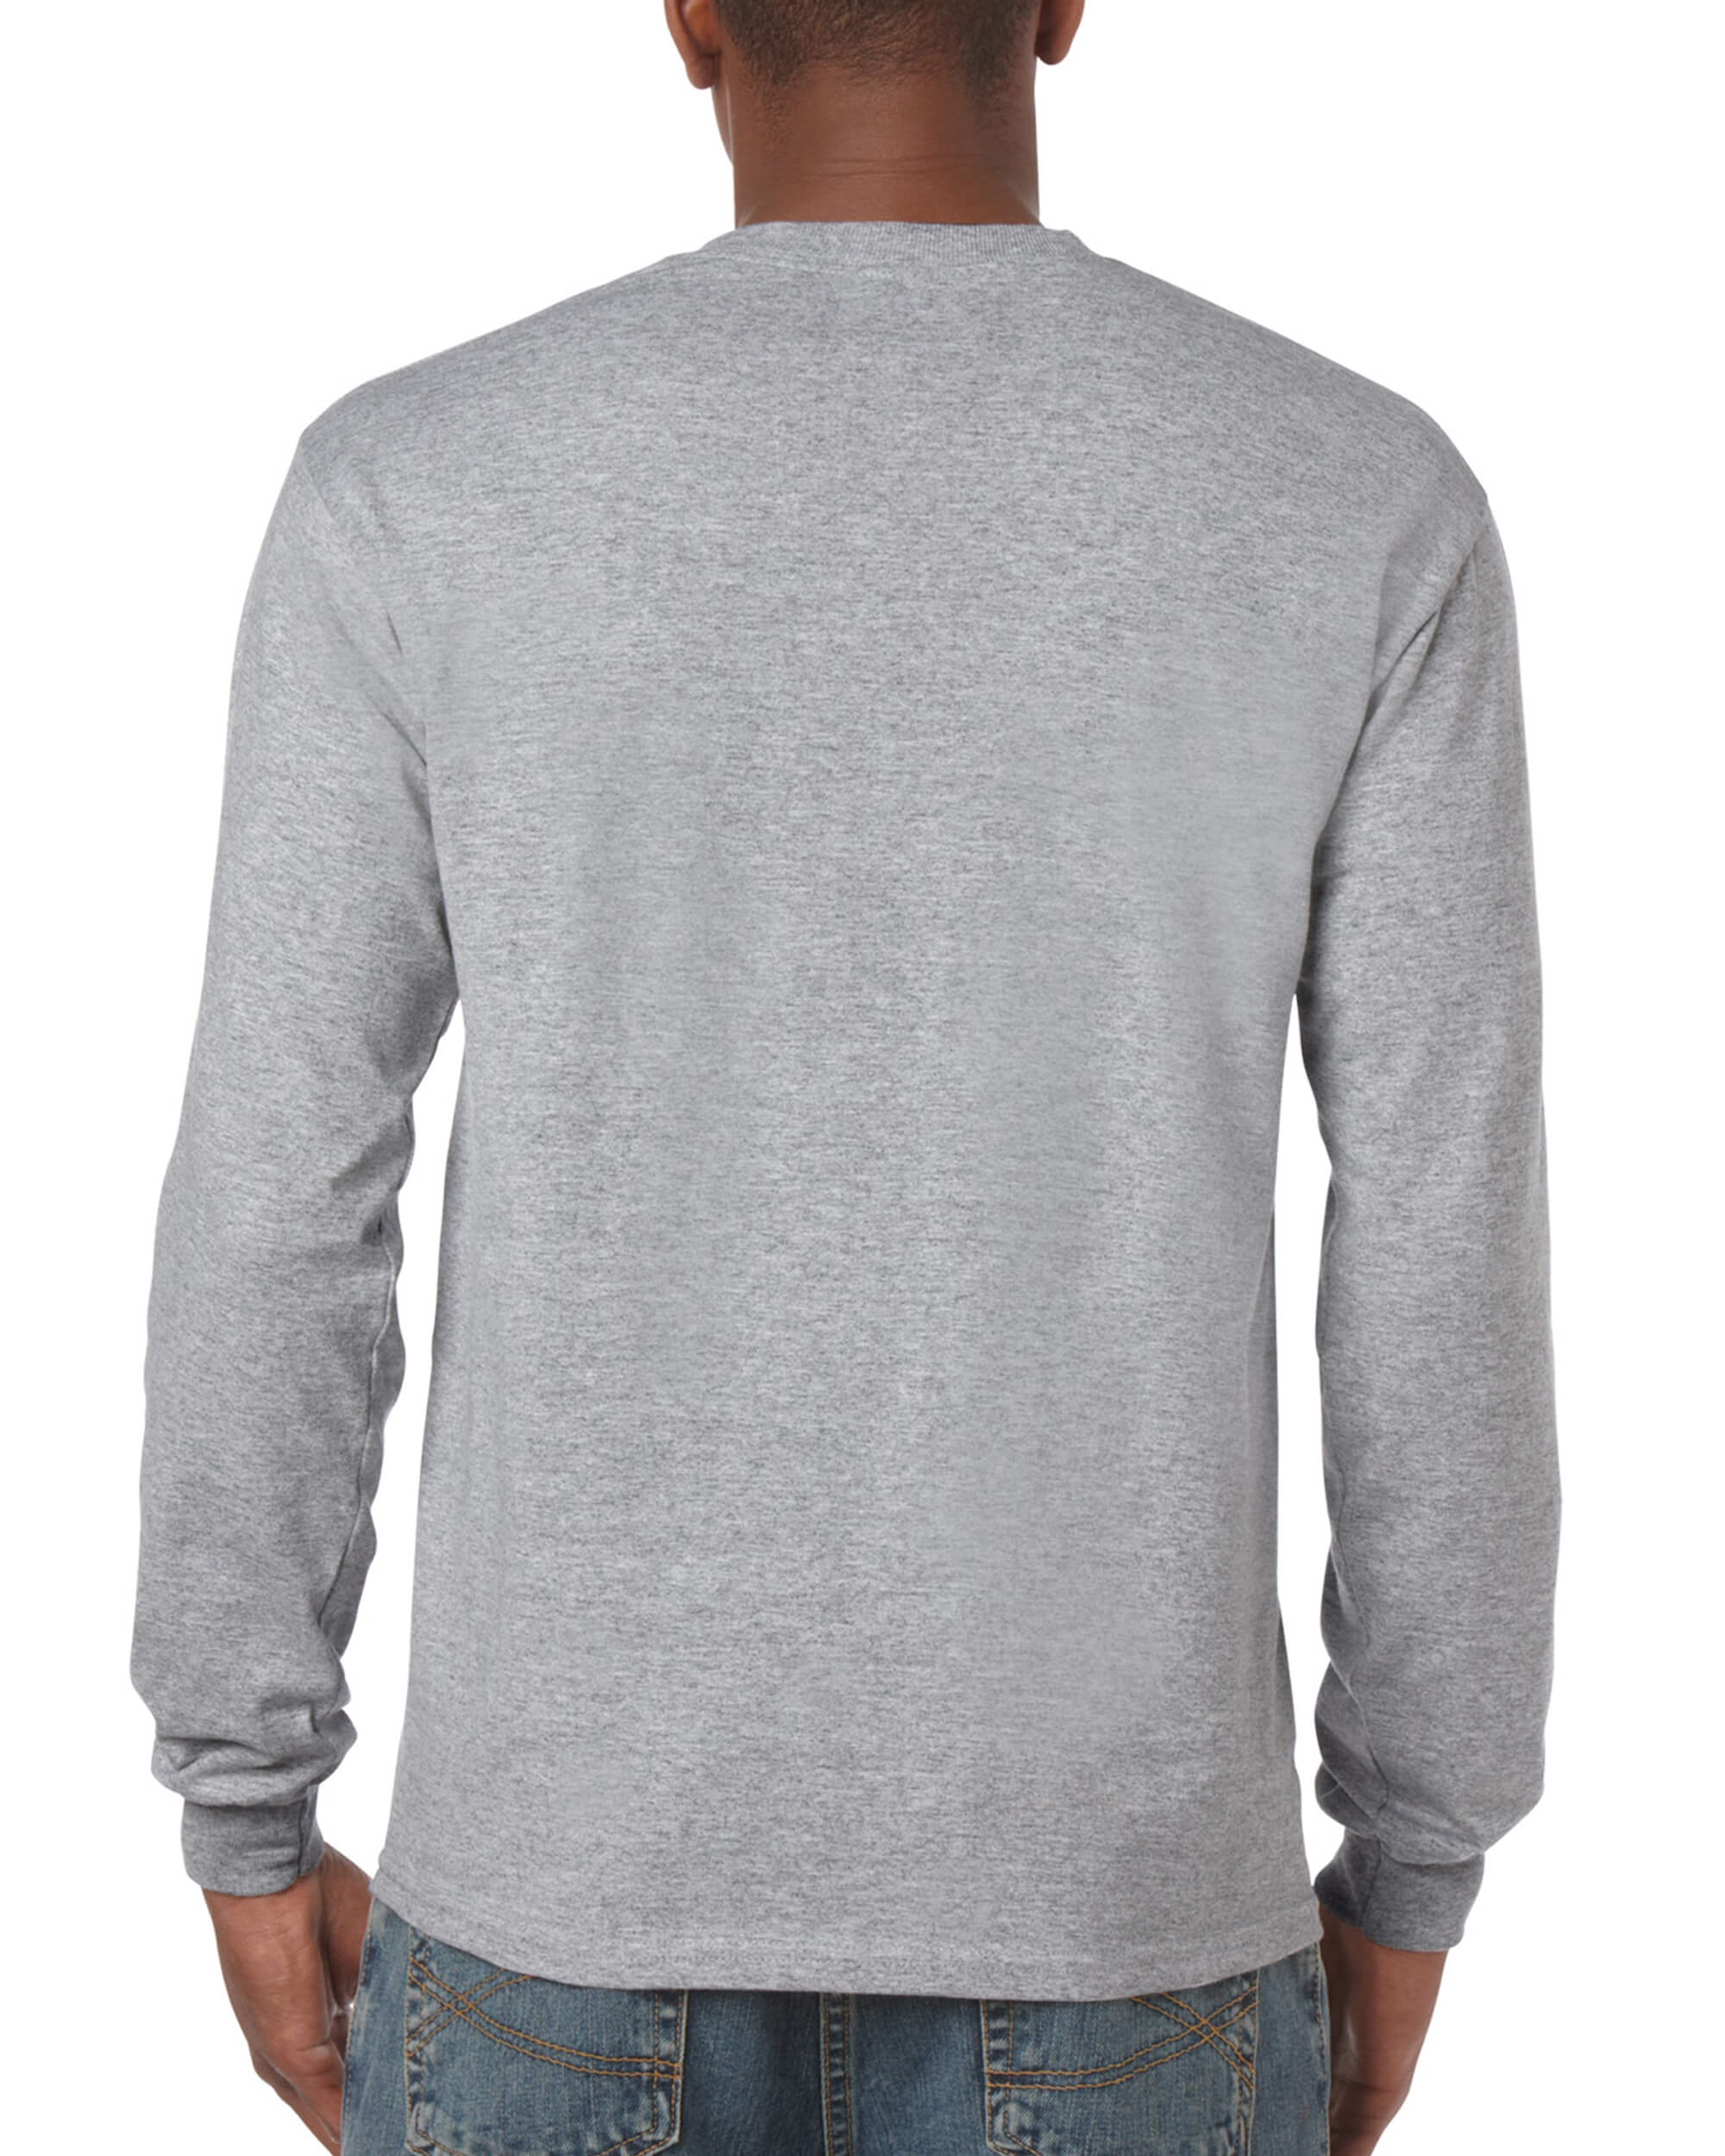 Long Sleeve T-Shirt - Sports Grey